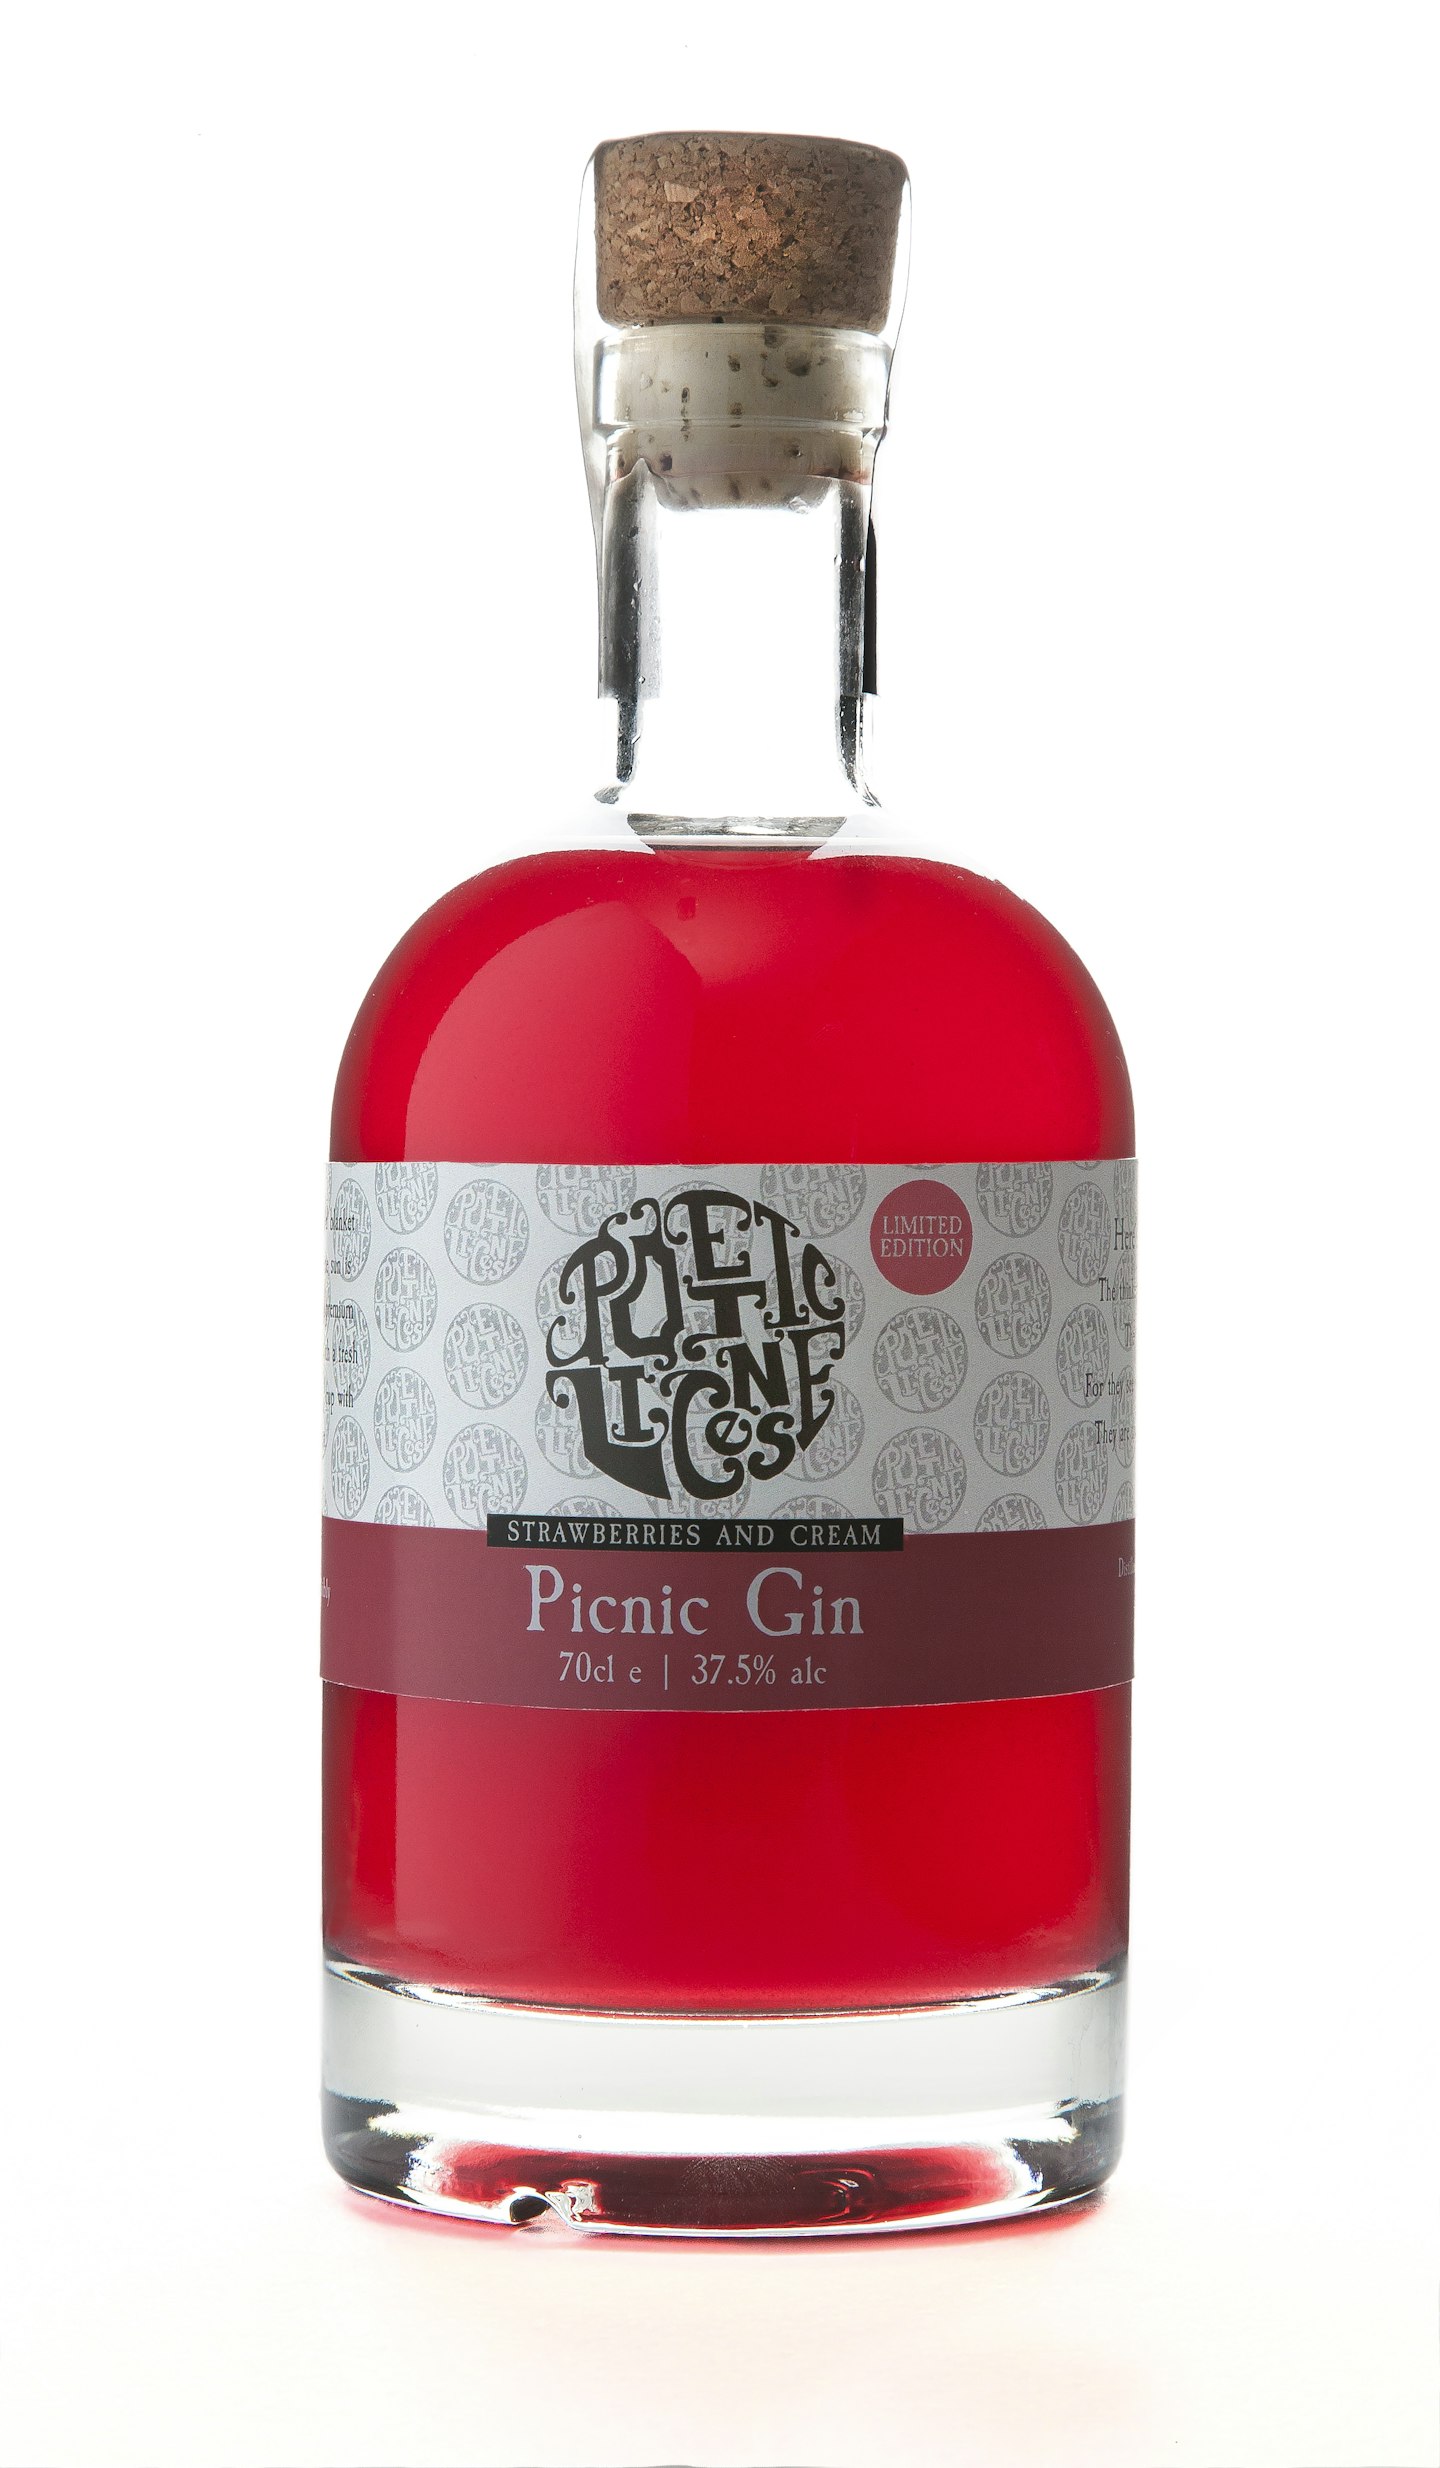 £32.50 Picnic Gin Strawberry, www.poeticlicensedistillery.co.uk